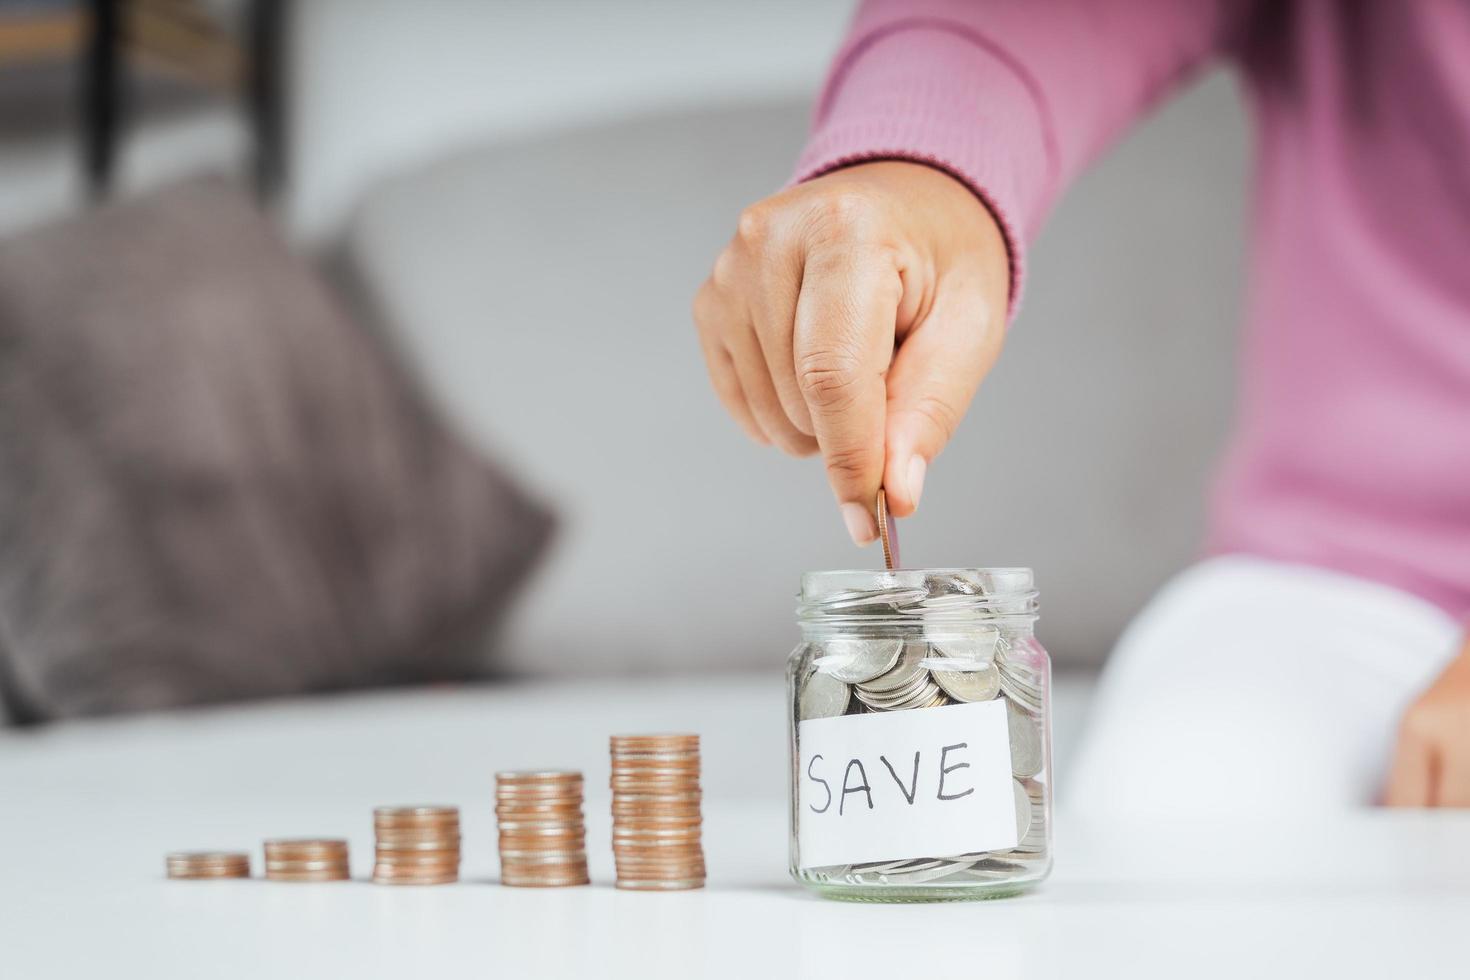 women hand putting money coin into glass jar for saving money. saving money and financial concept photo